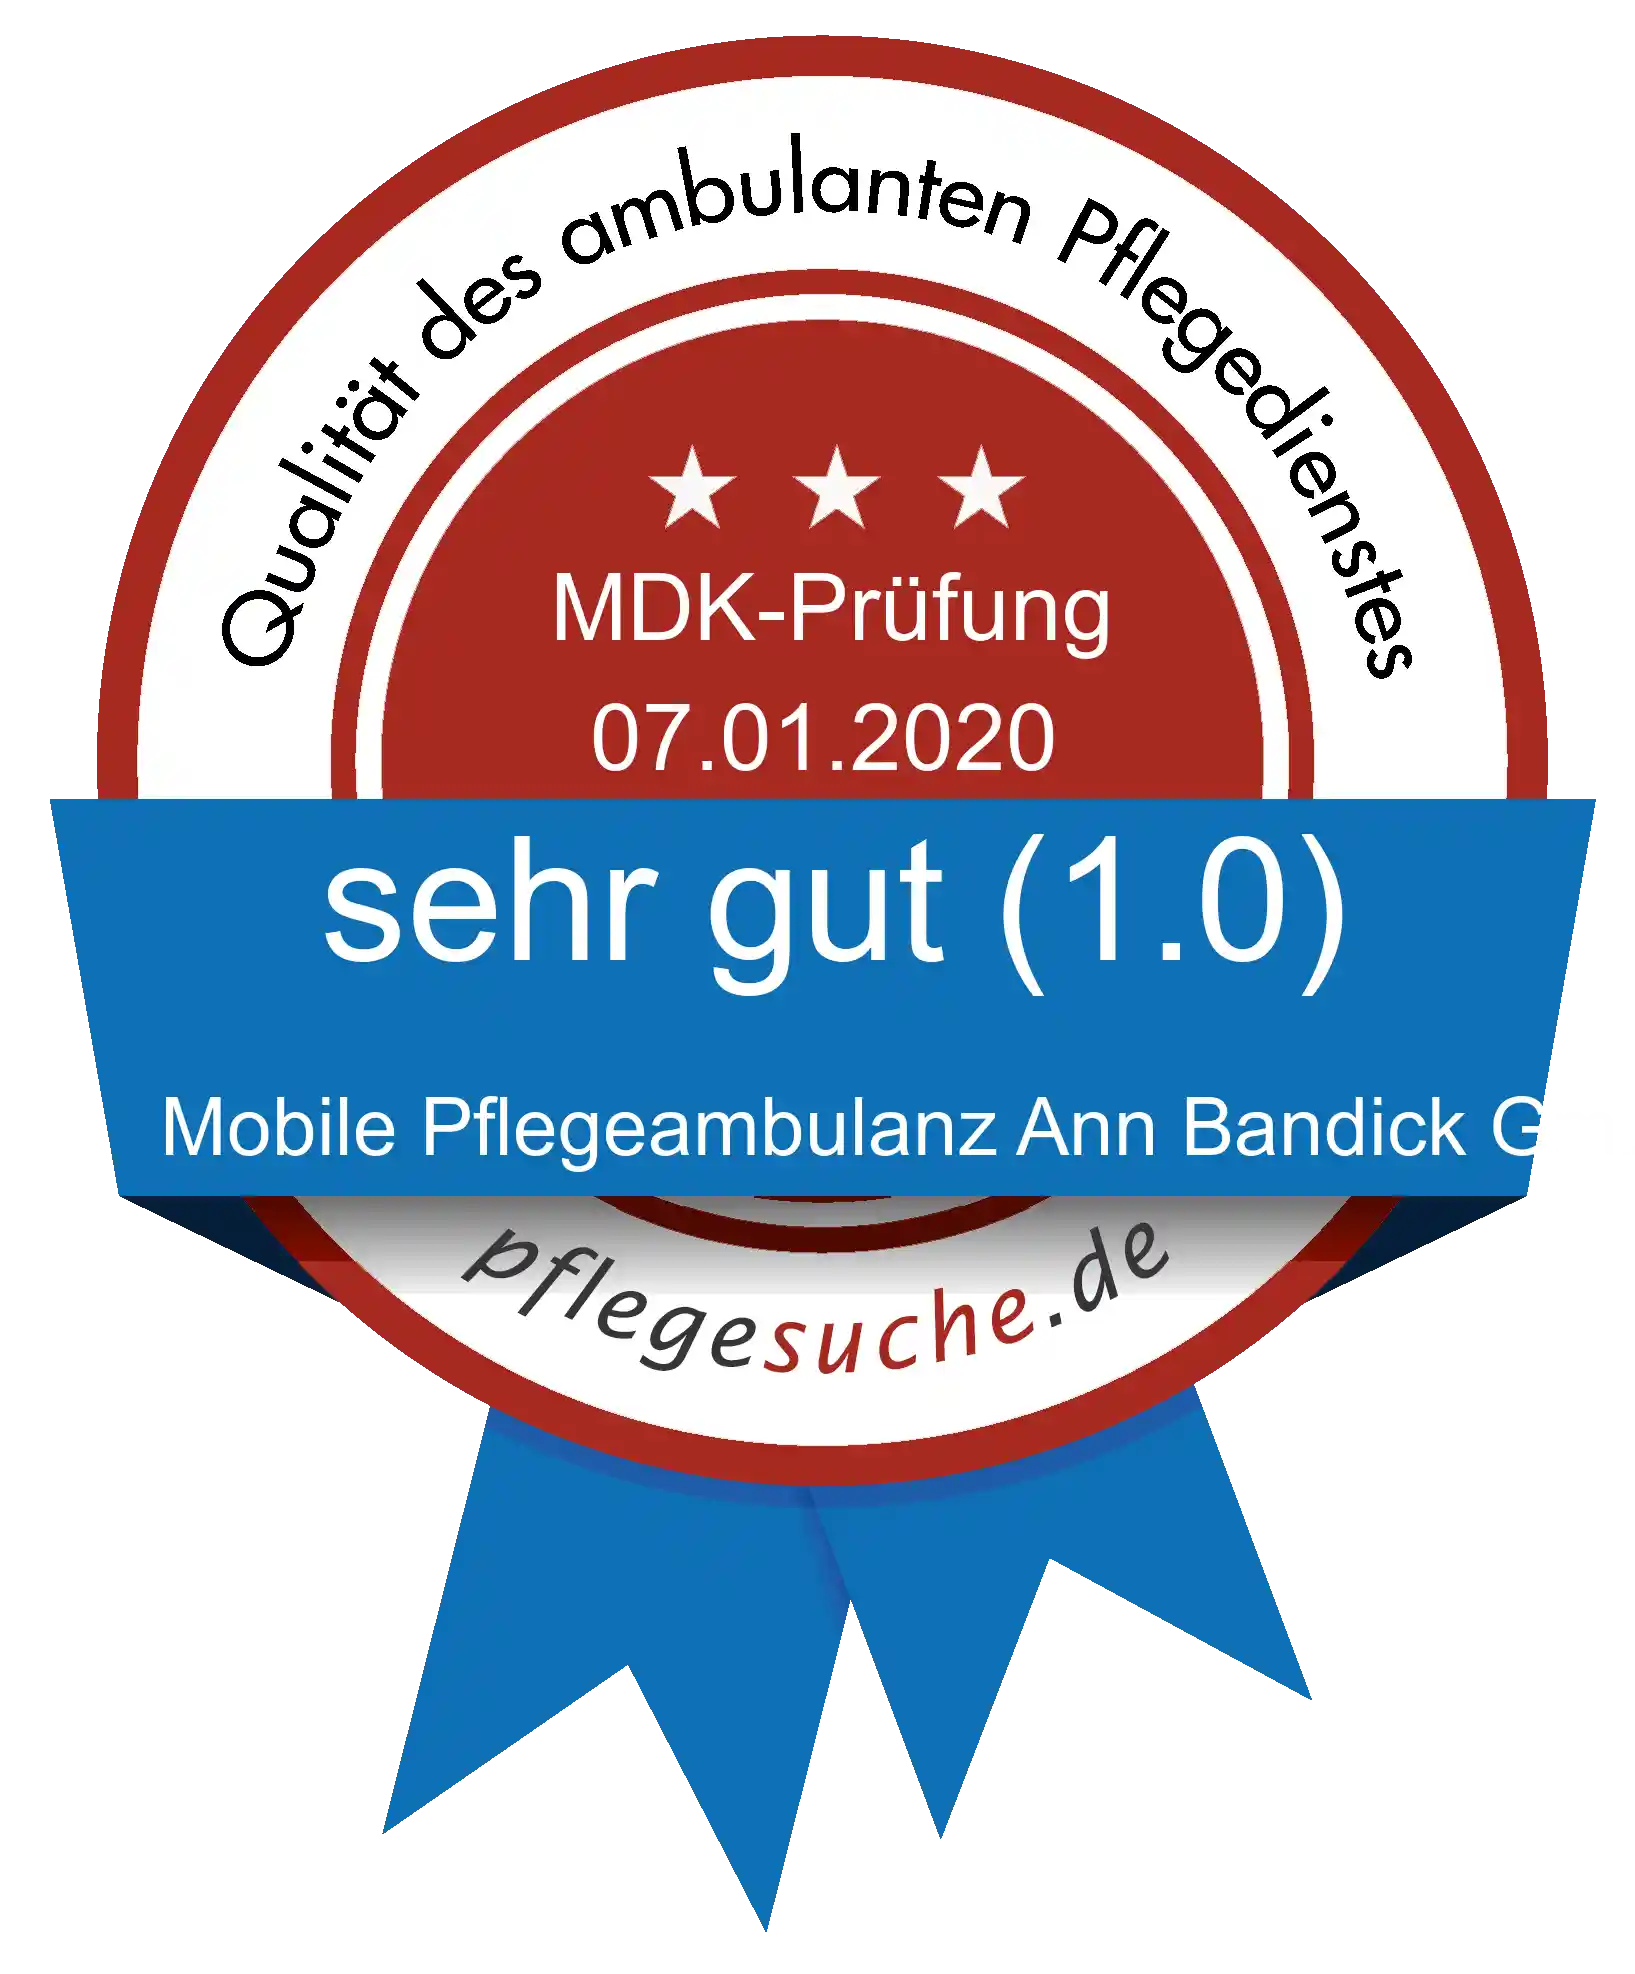 Siegel Benotung: Mobile Pflegeambulanz Ann Bandick GmbH